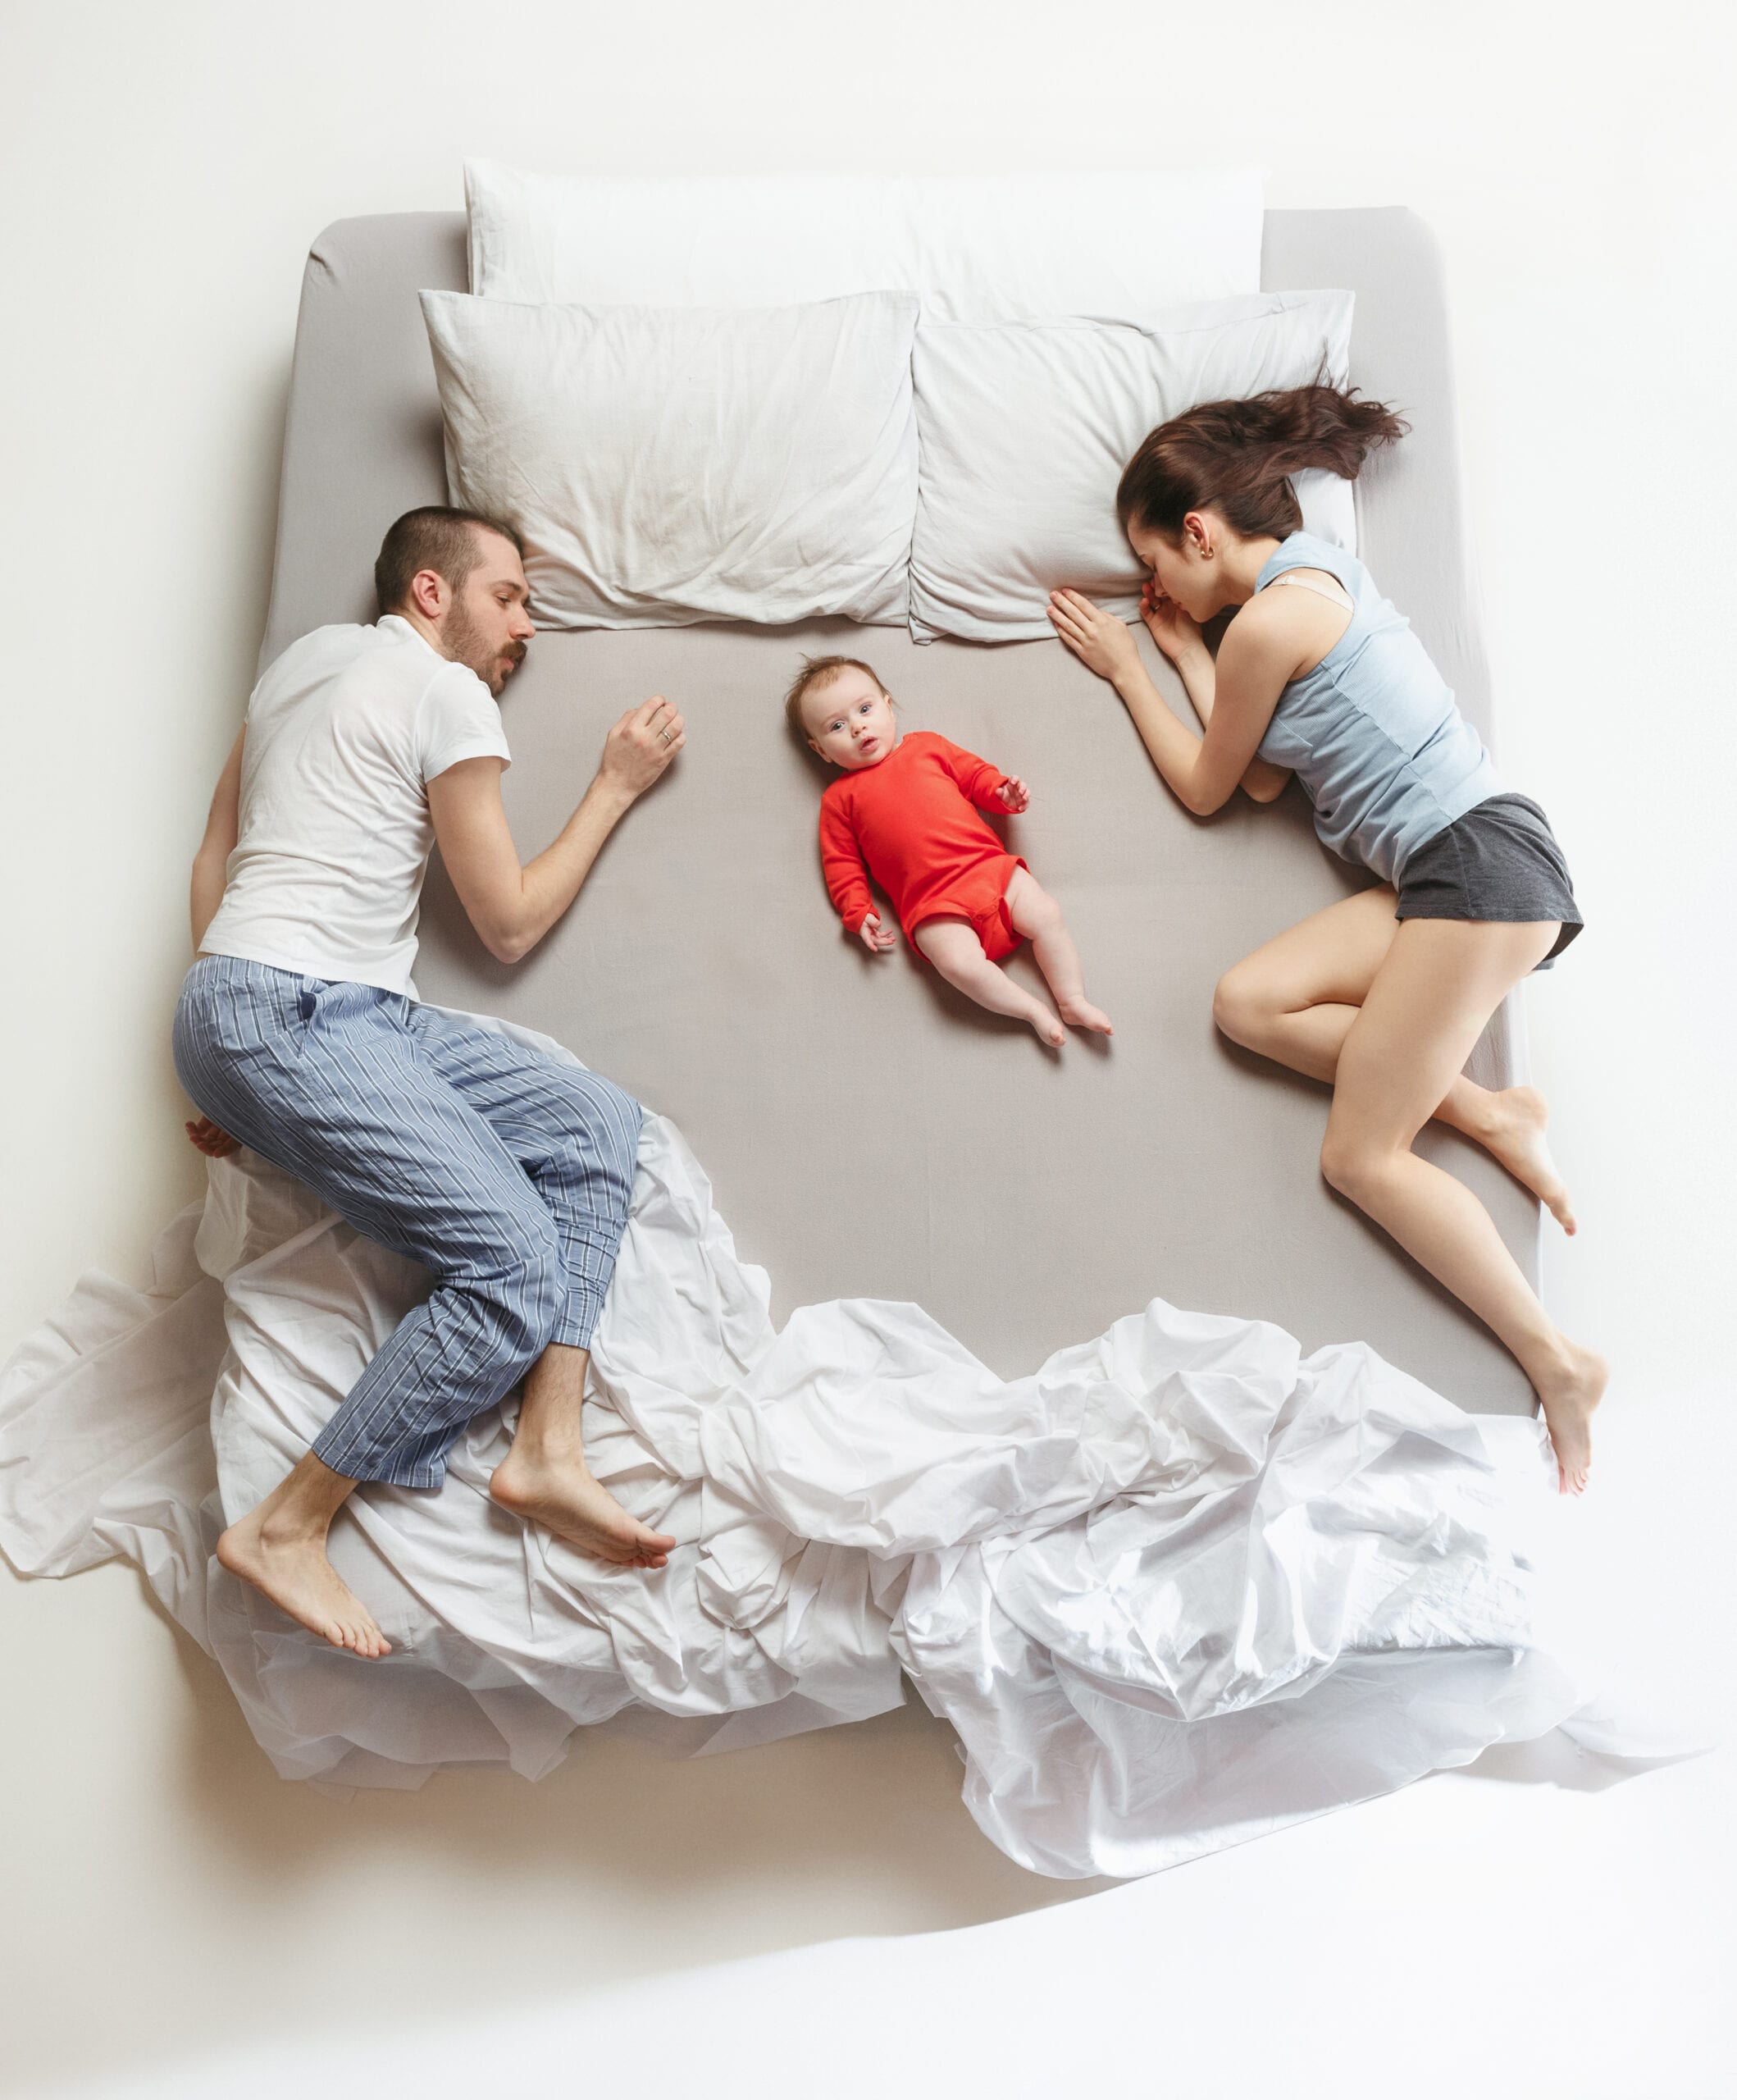 Attachment Parenting & Sleep Training